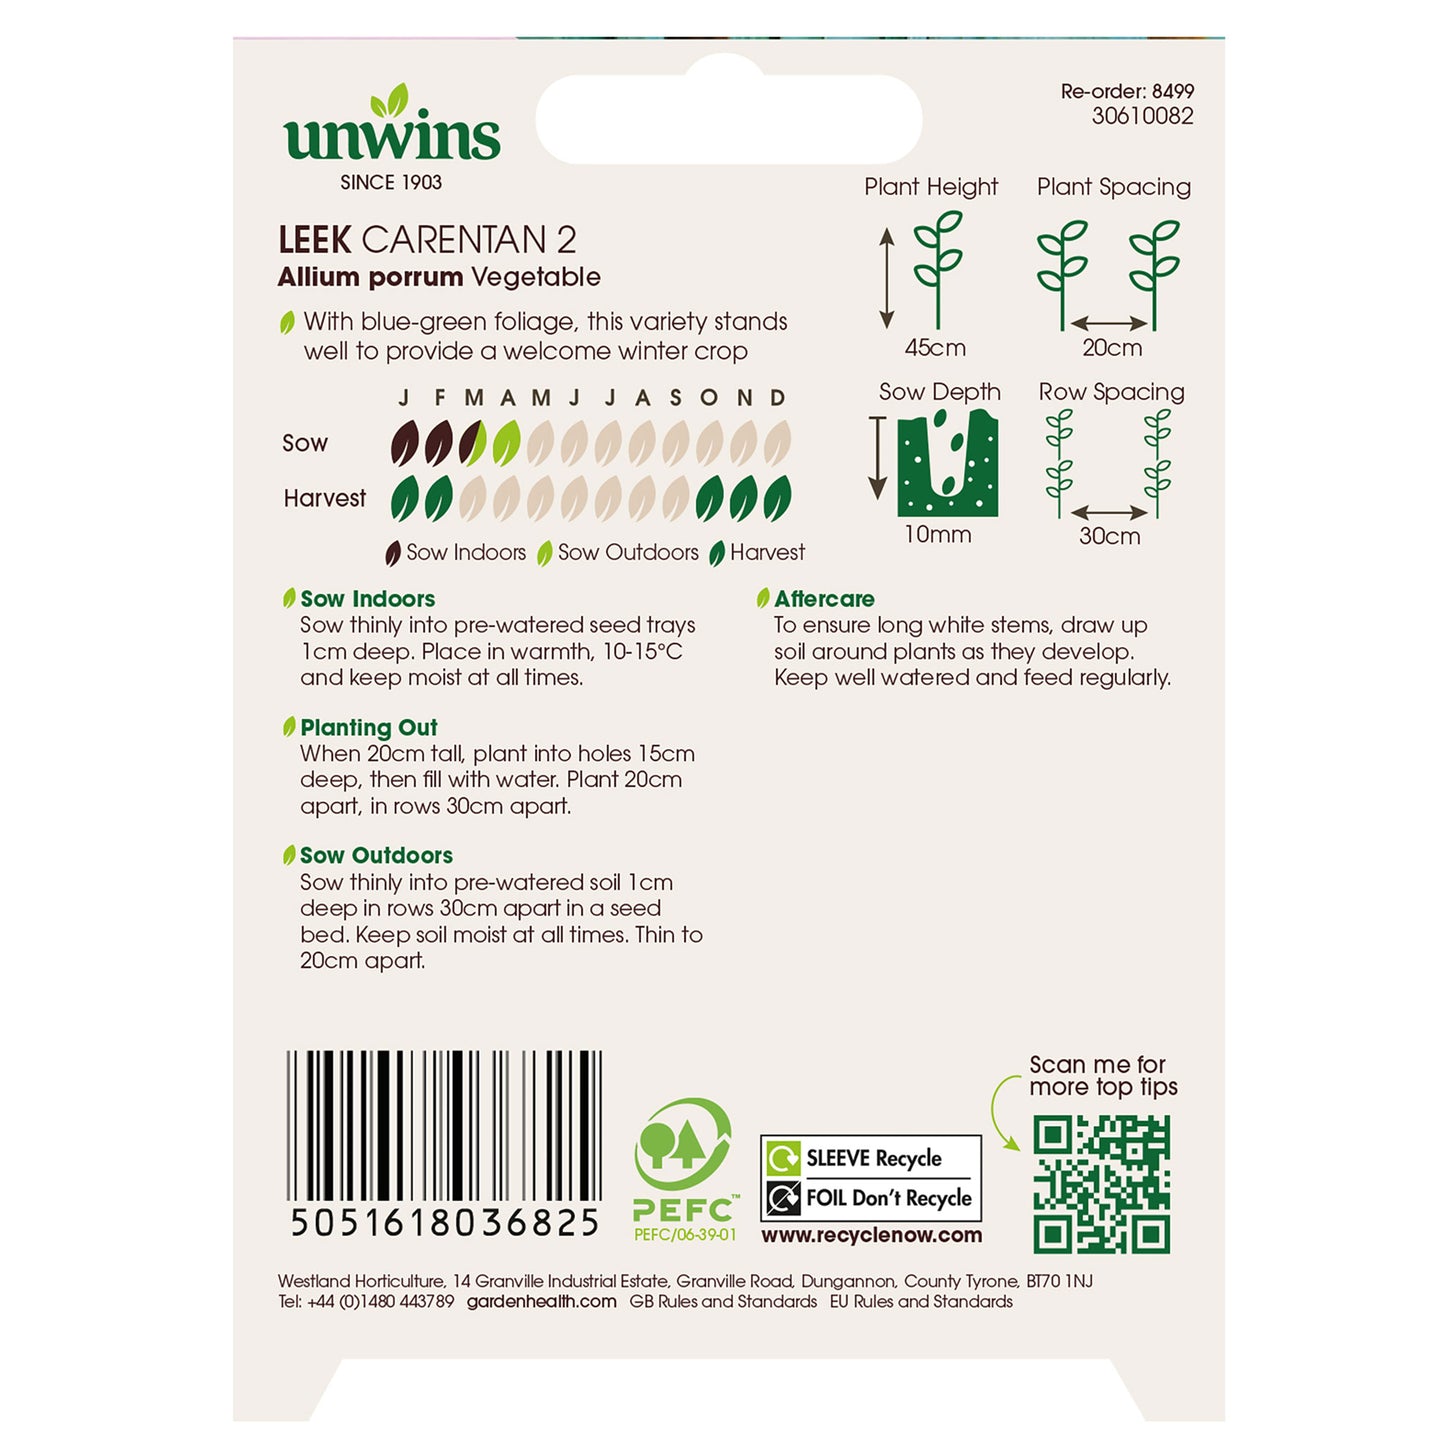 Unwins Organic Leek Carentan 2 Seeds back of pack